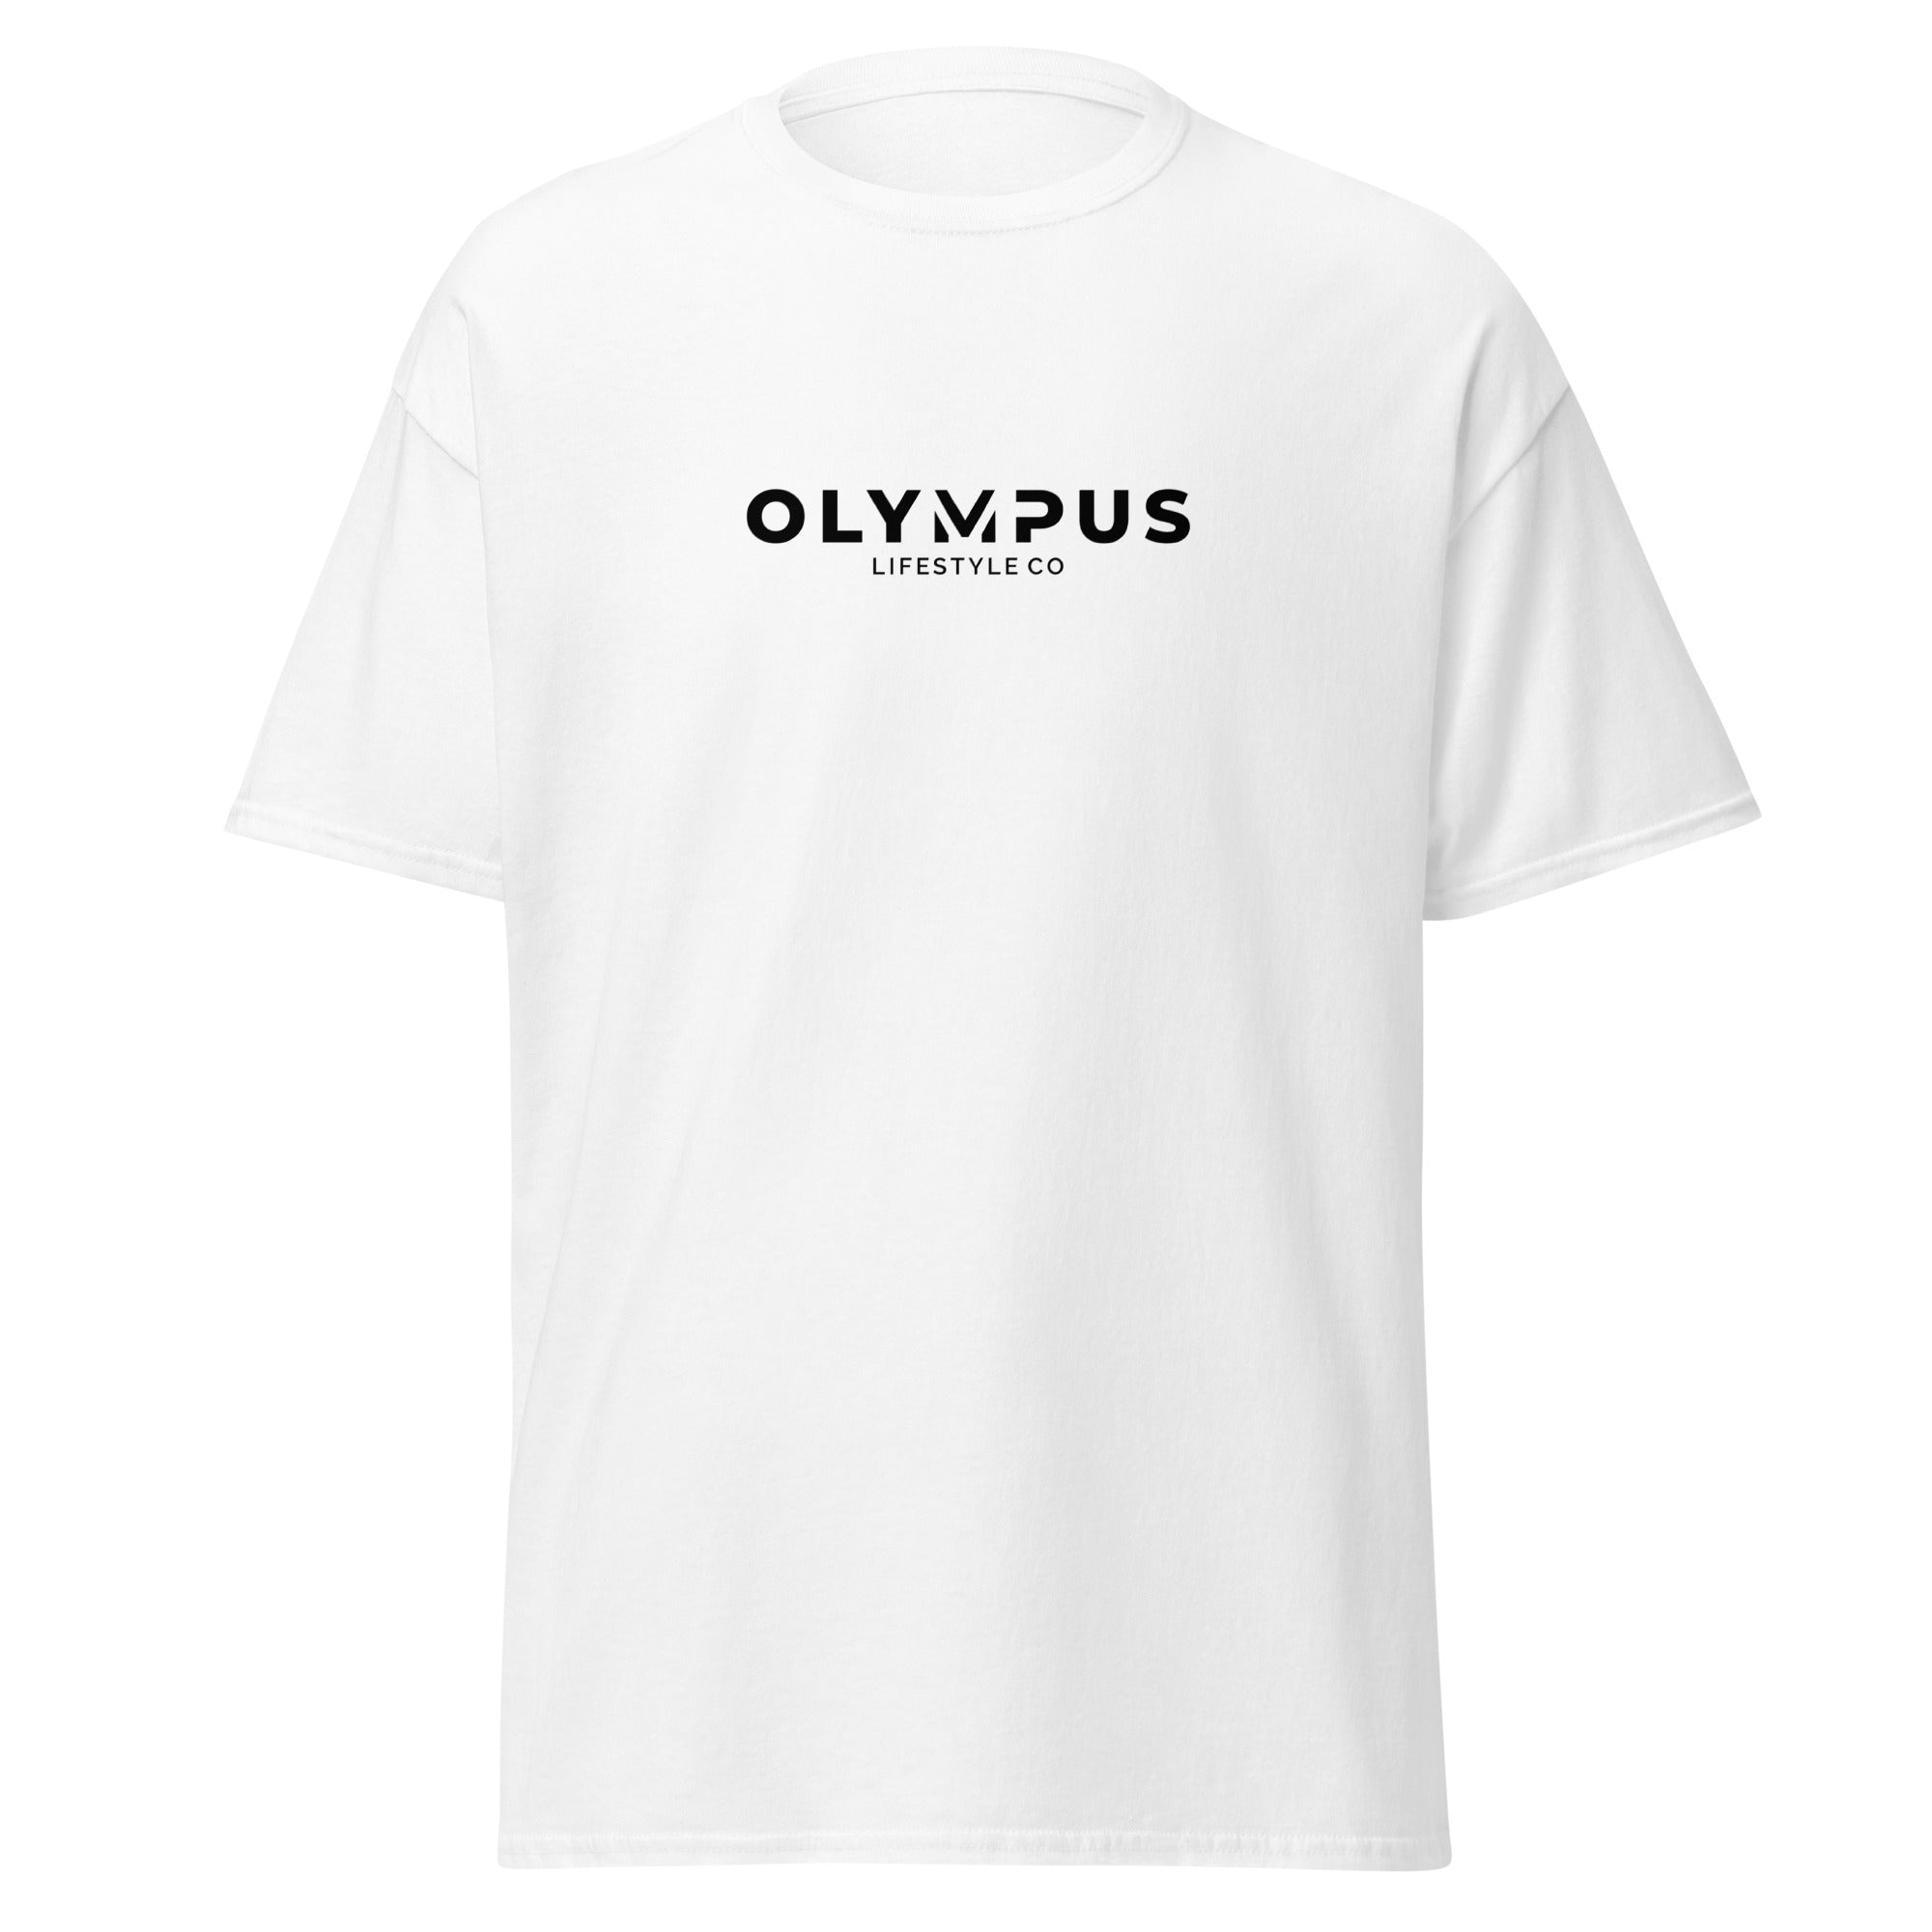 Olympus Women's Printed T-Shirt Black Text Logo